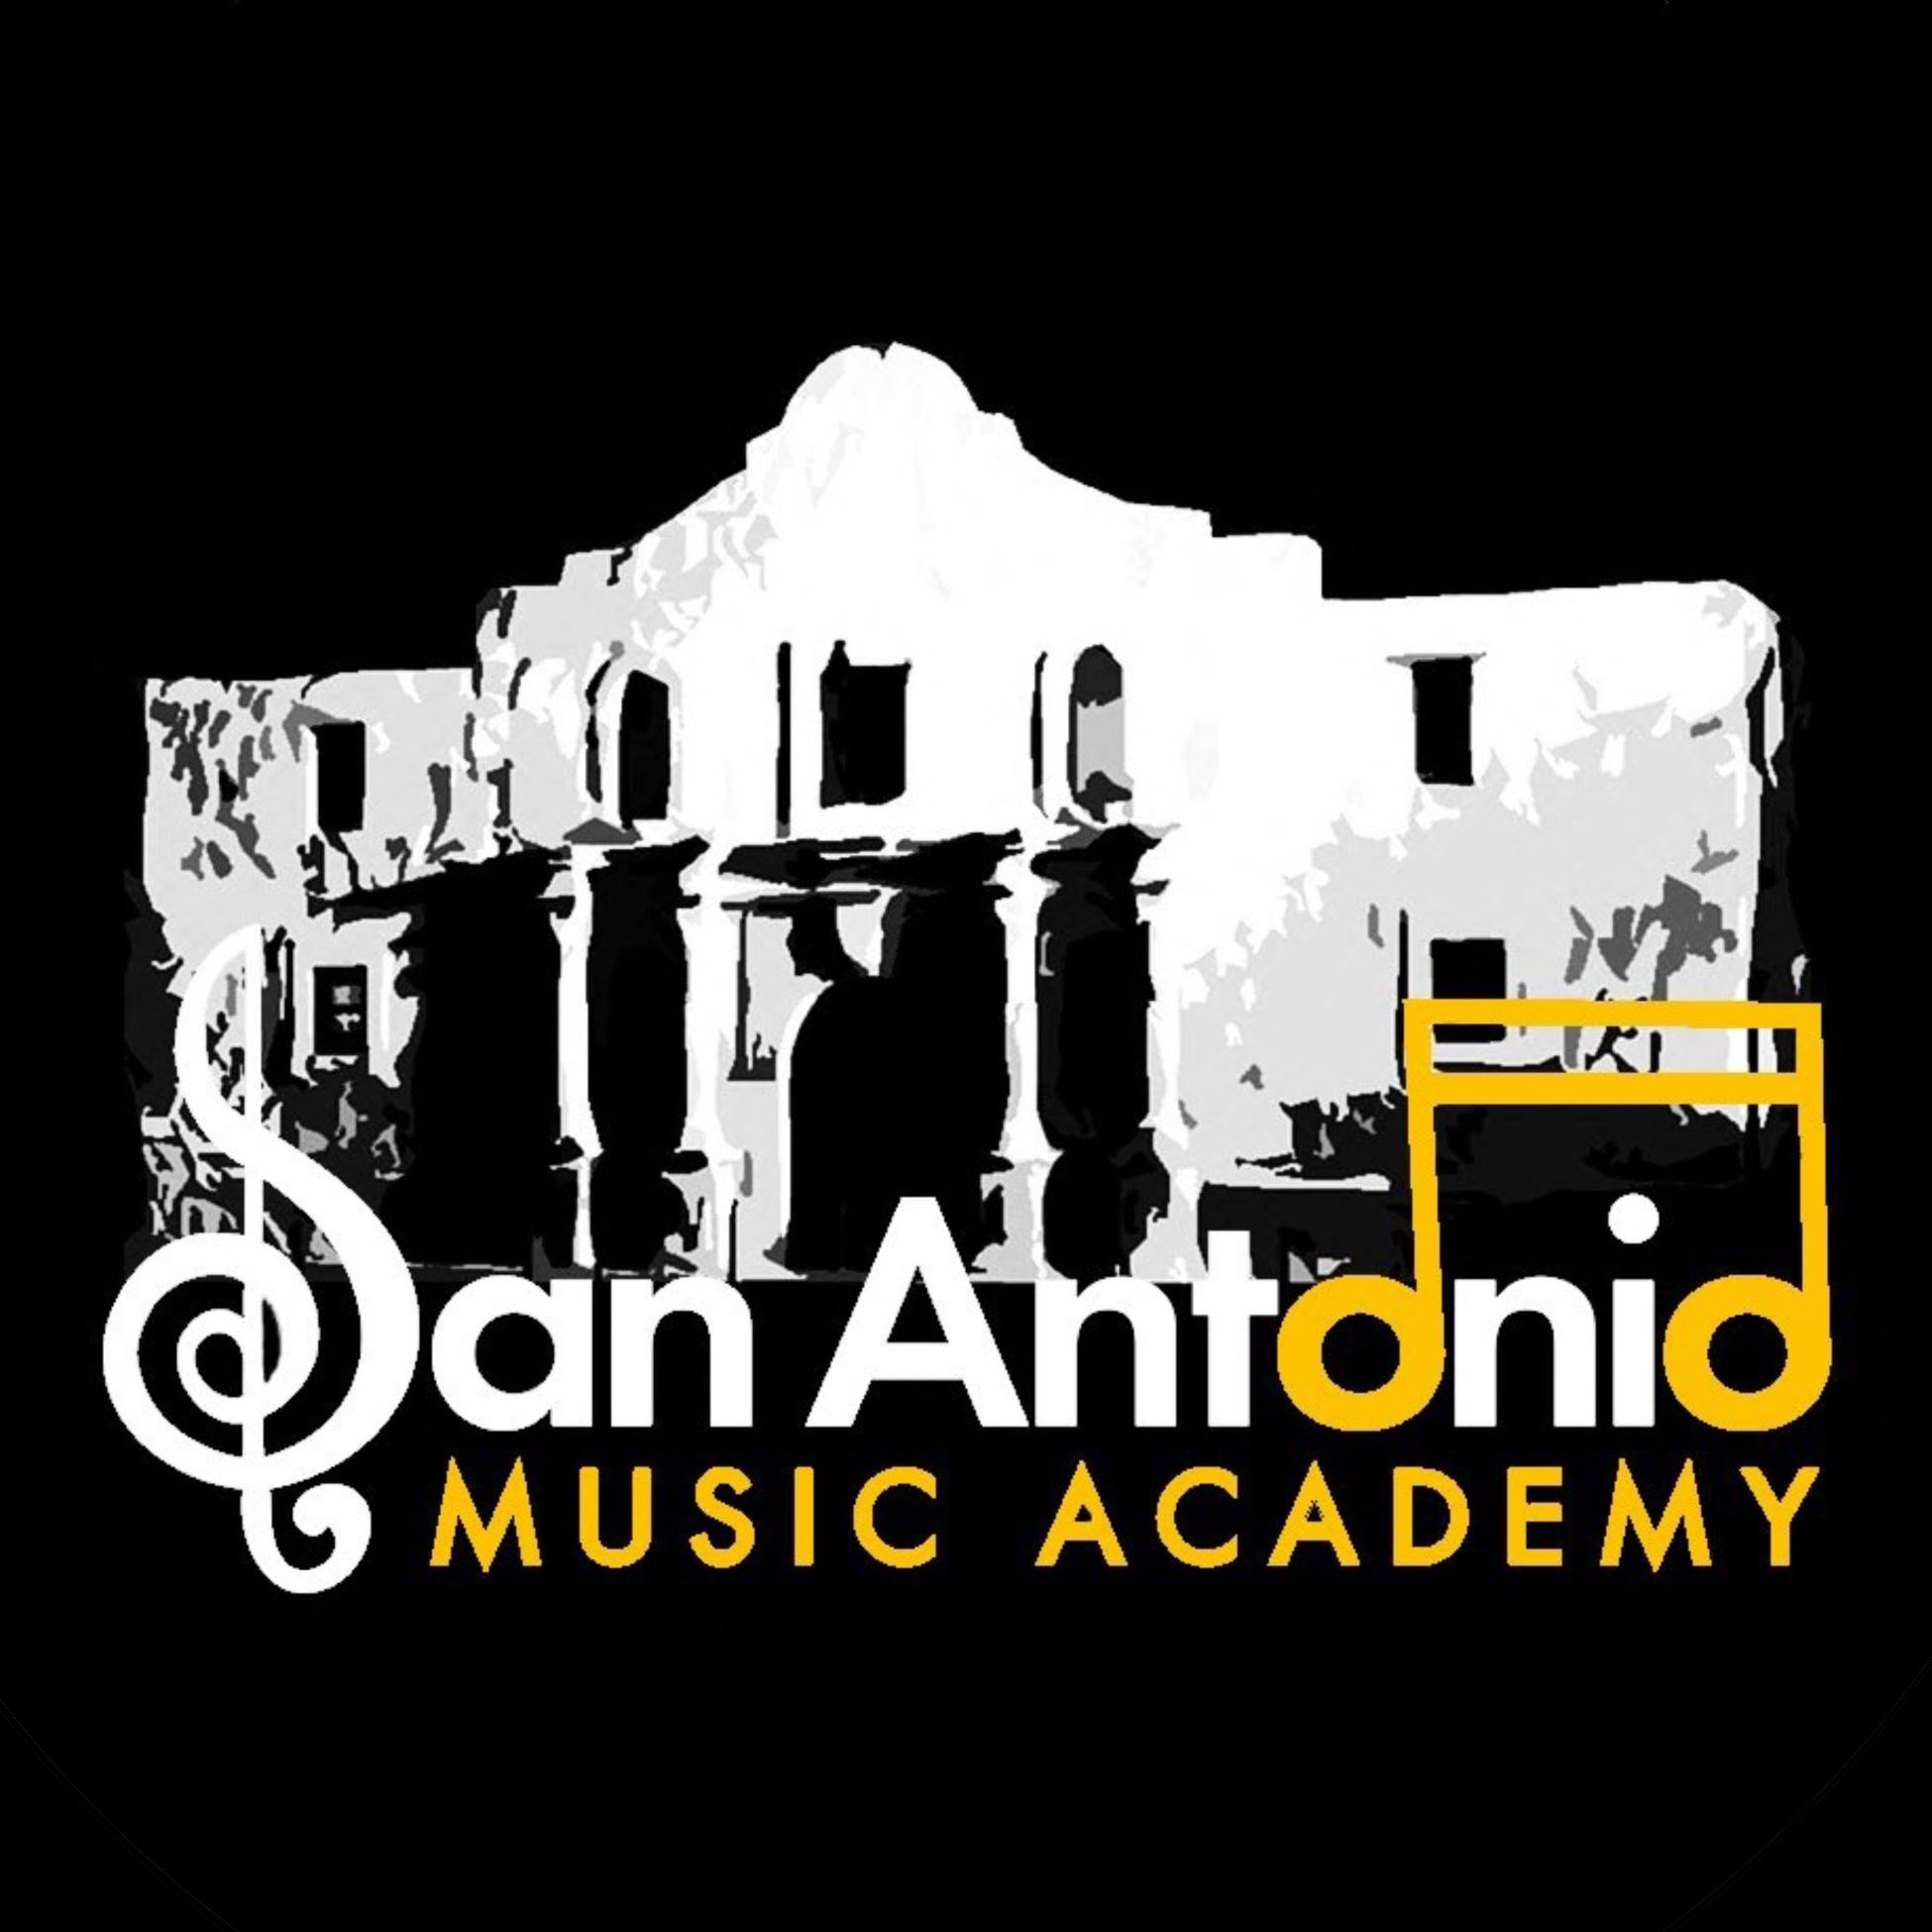 Musical Arts Center of San Antonio Logo